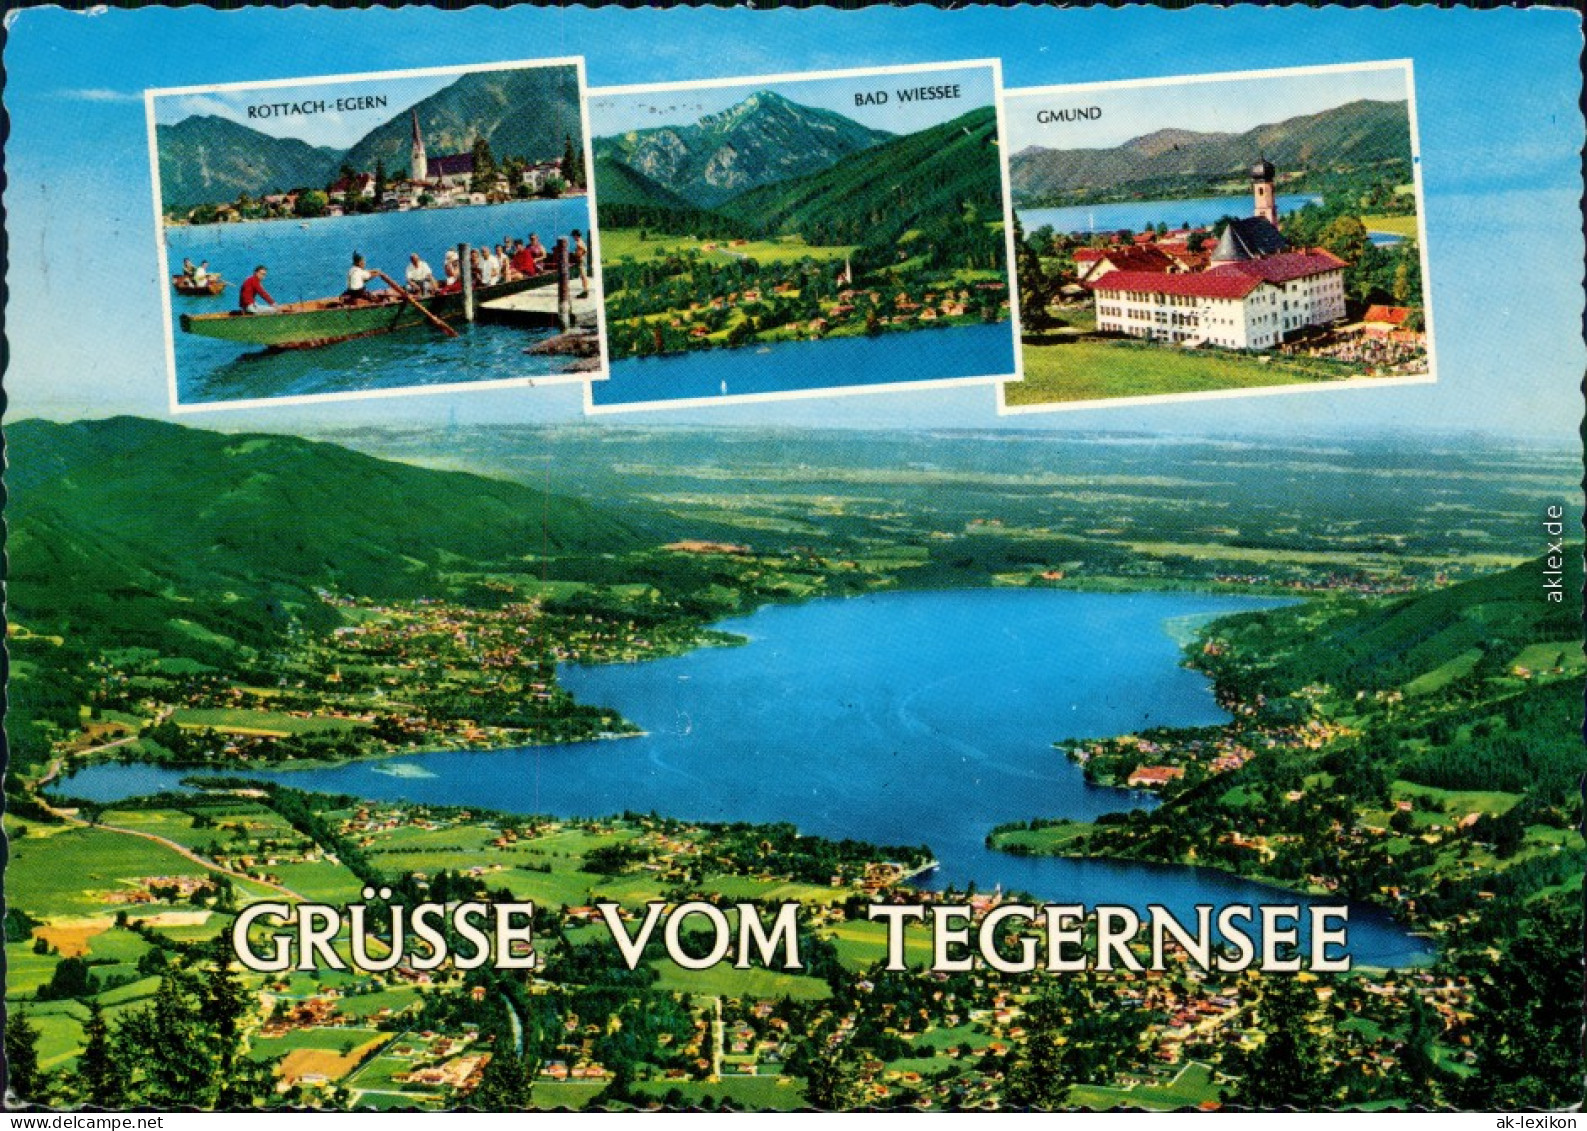 Tegernsee (Stadt) Luftbild - Tegernsee, Rottach-Egern, Bad Wiessee, Gemund 1967 - Tegernsee